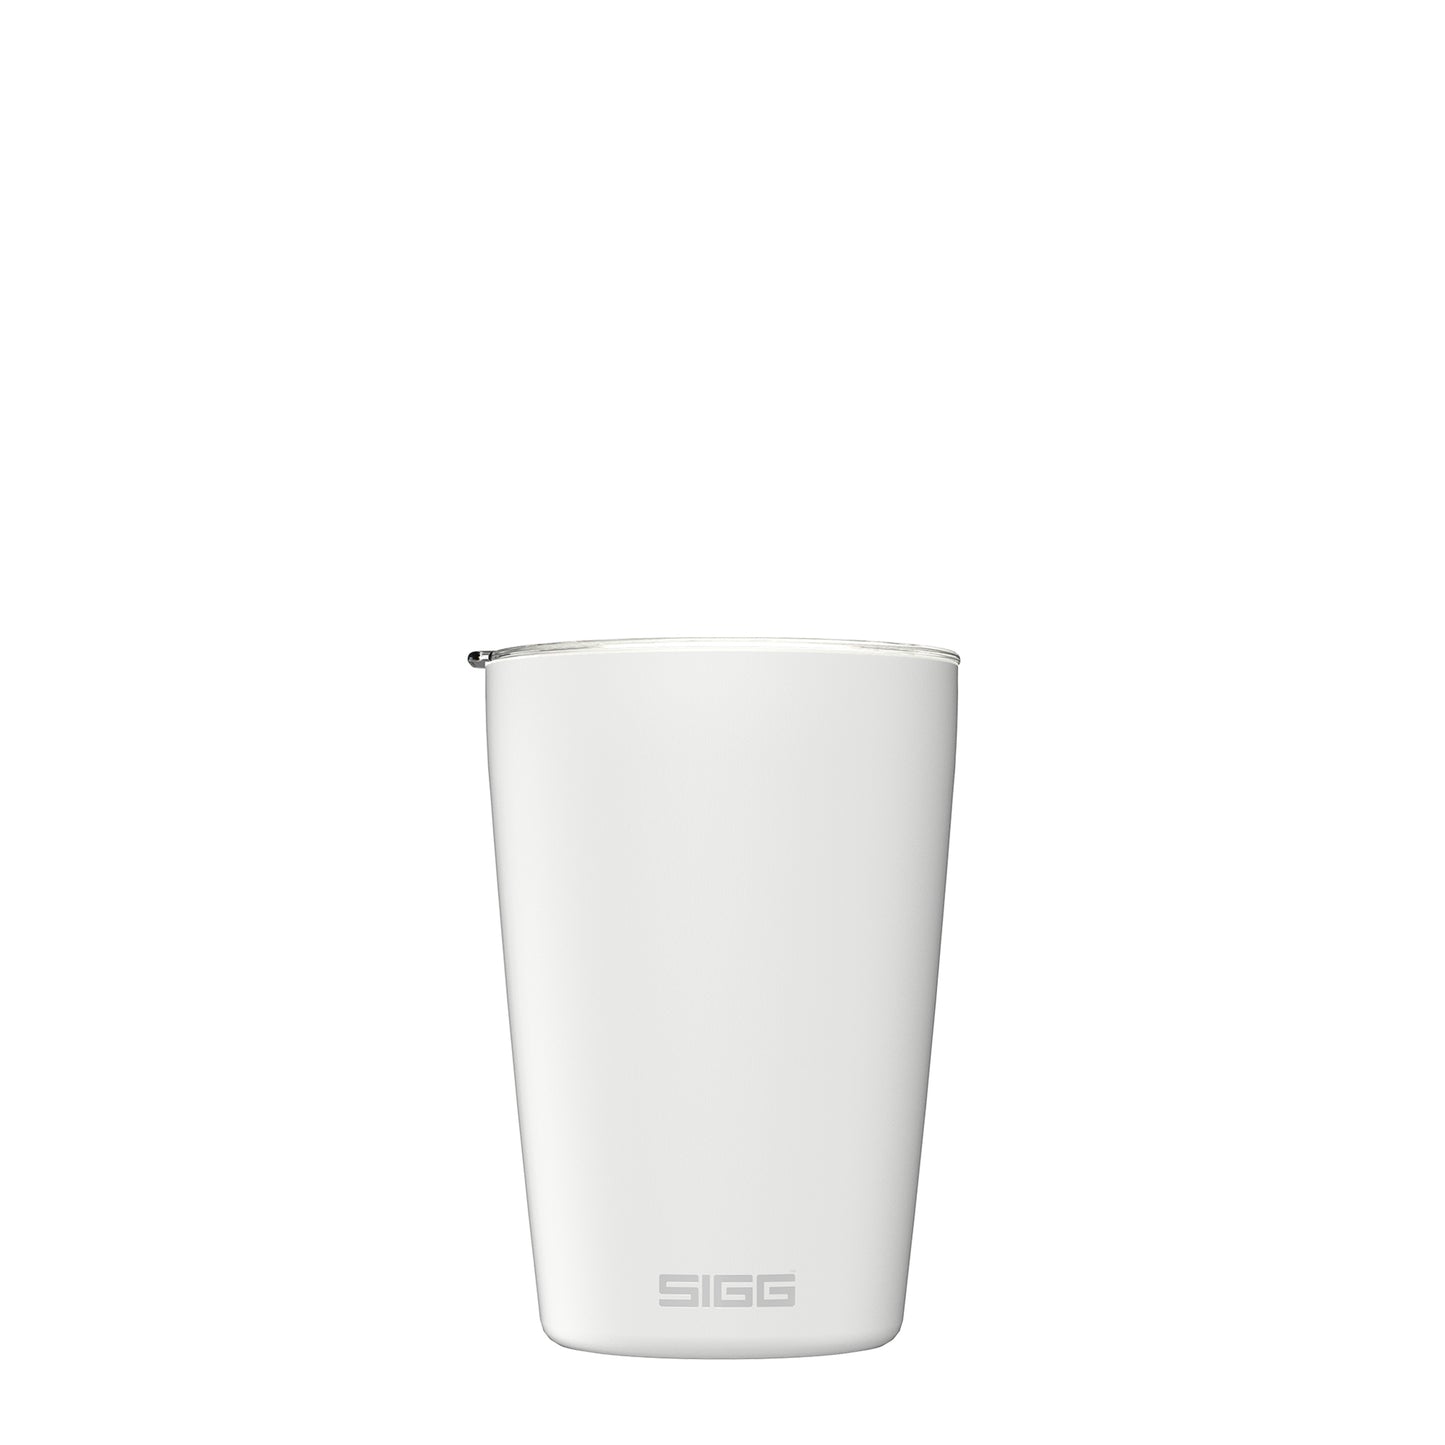 SIGG Neso Cup 300 ml